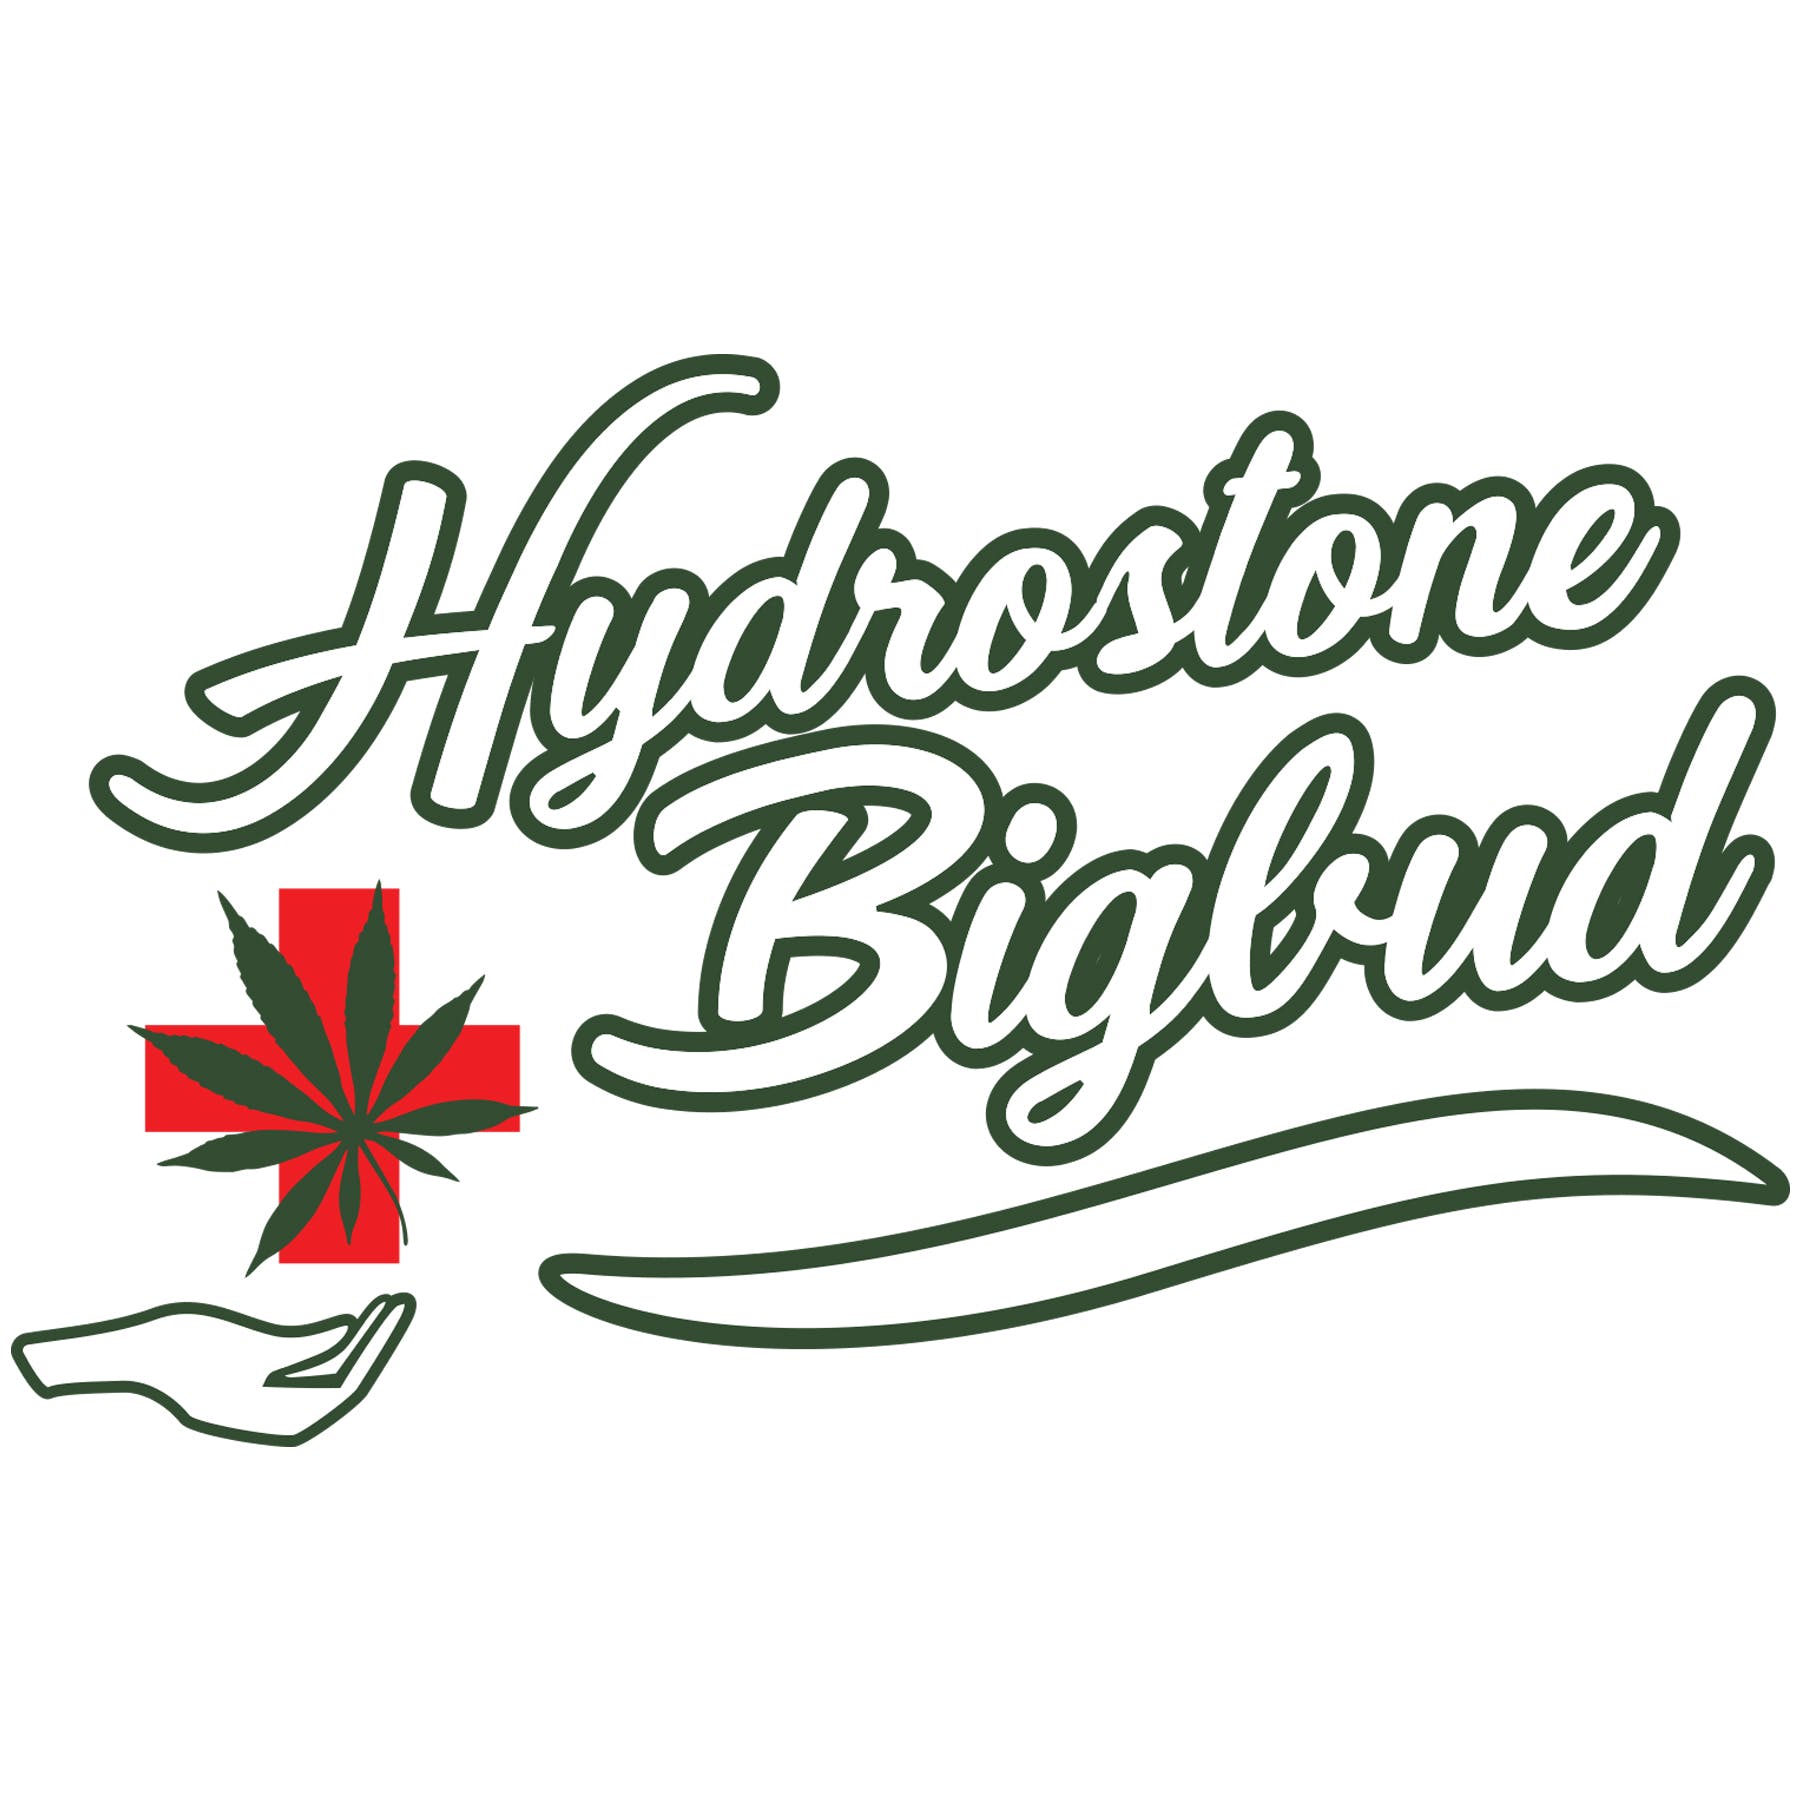 Hydrostone Bigbud - Medical Marijuana Doctors - Cannabizme.com